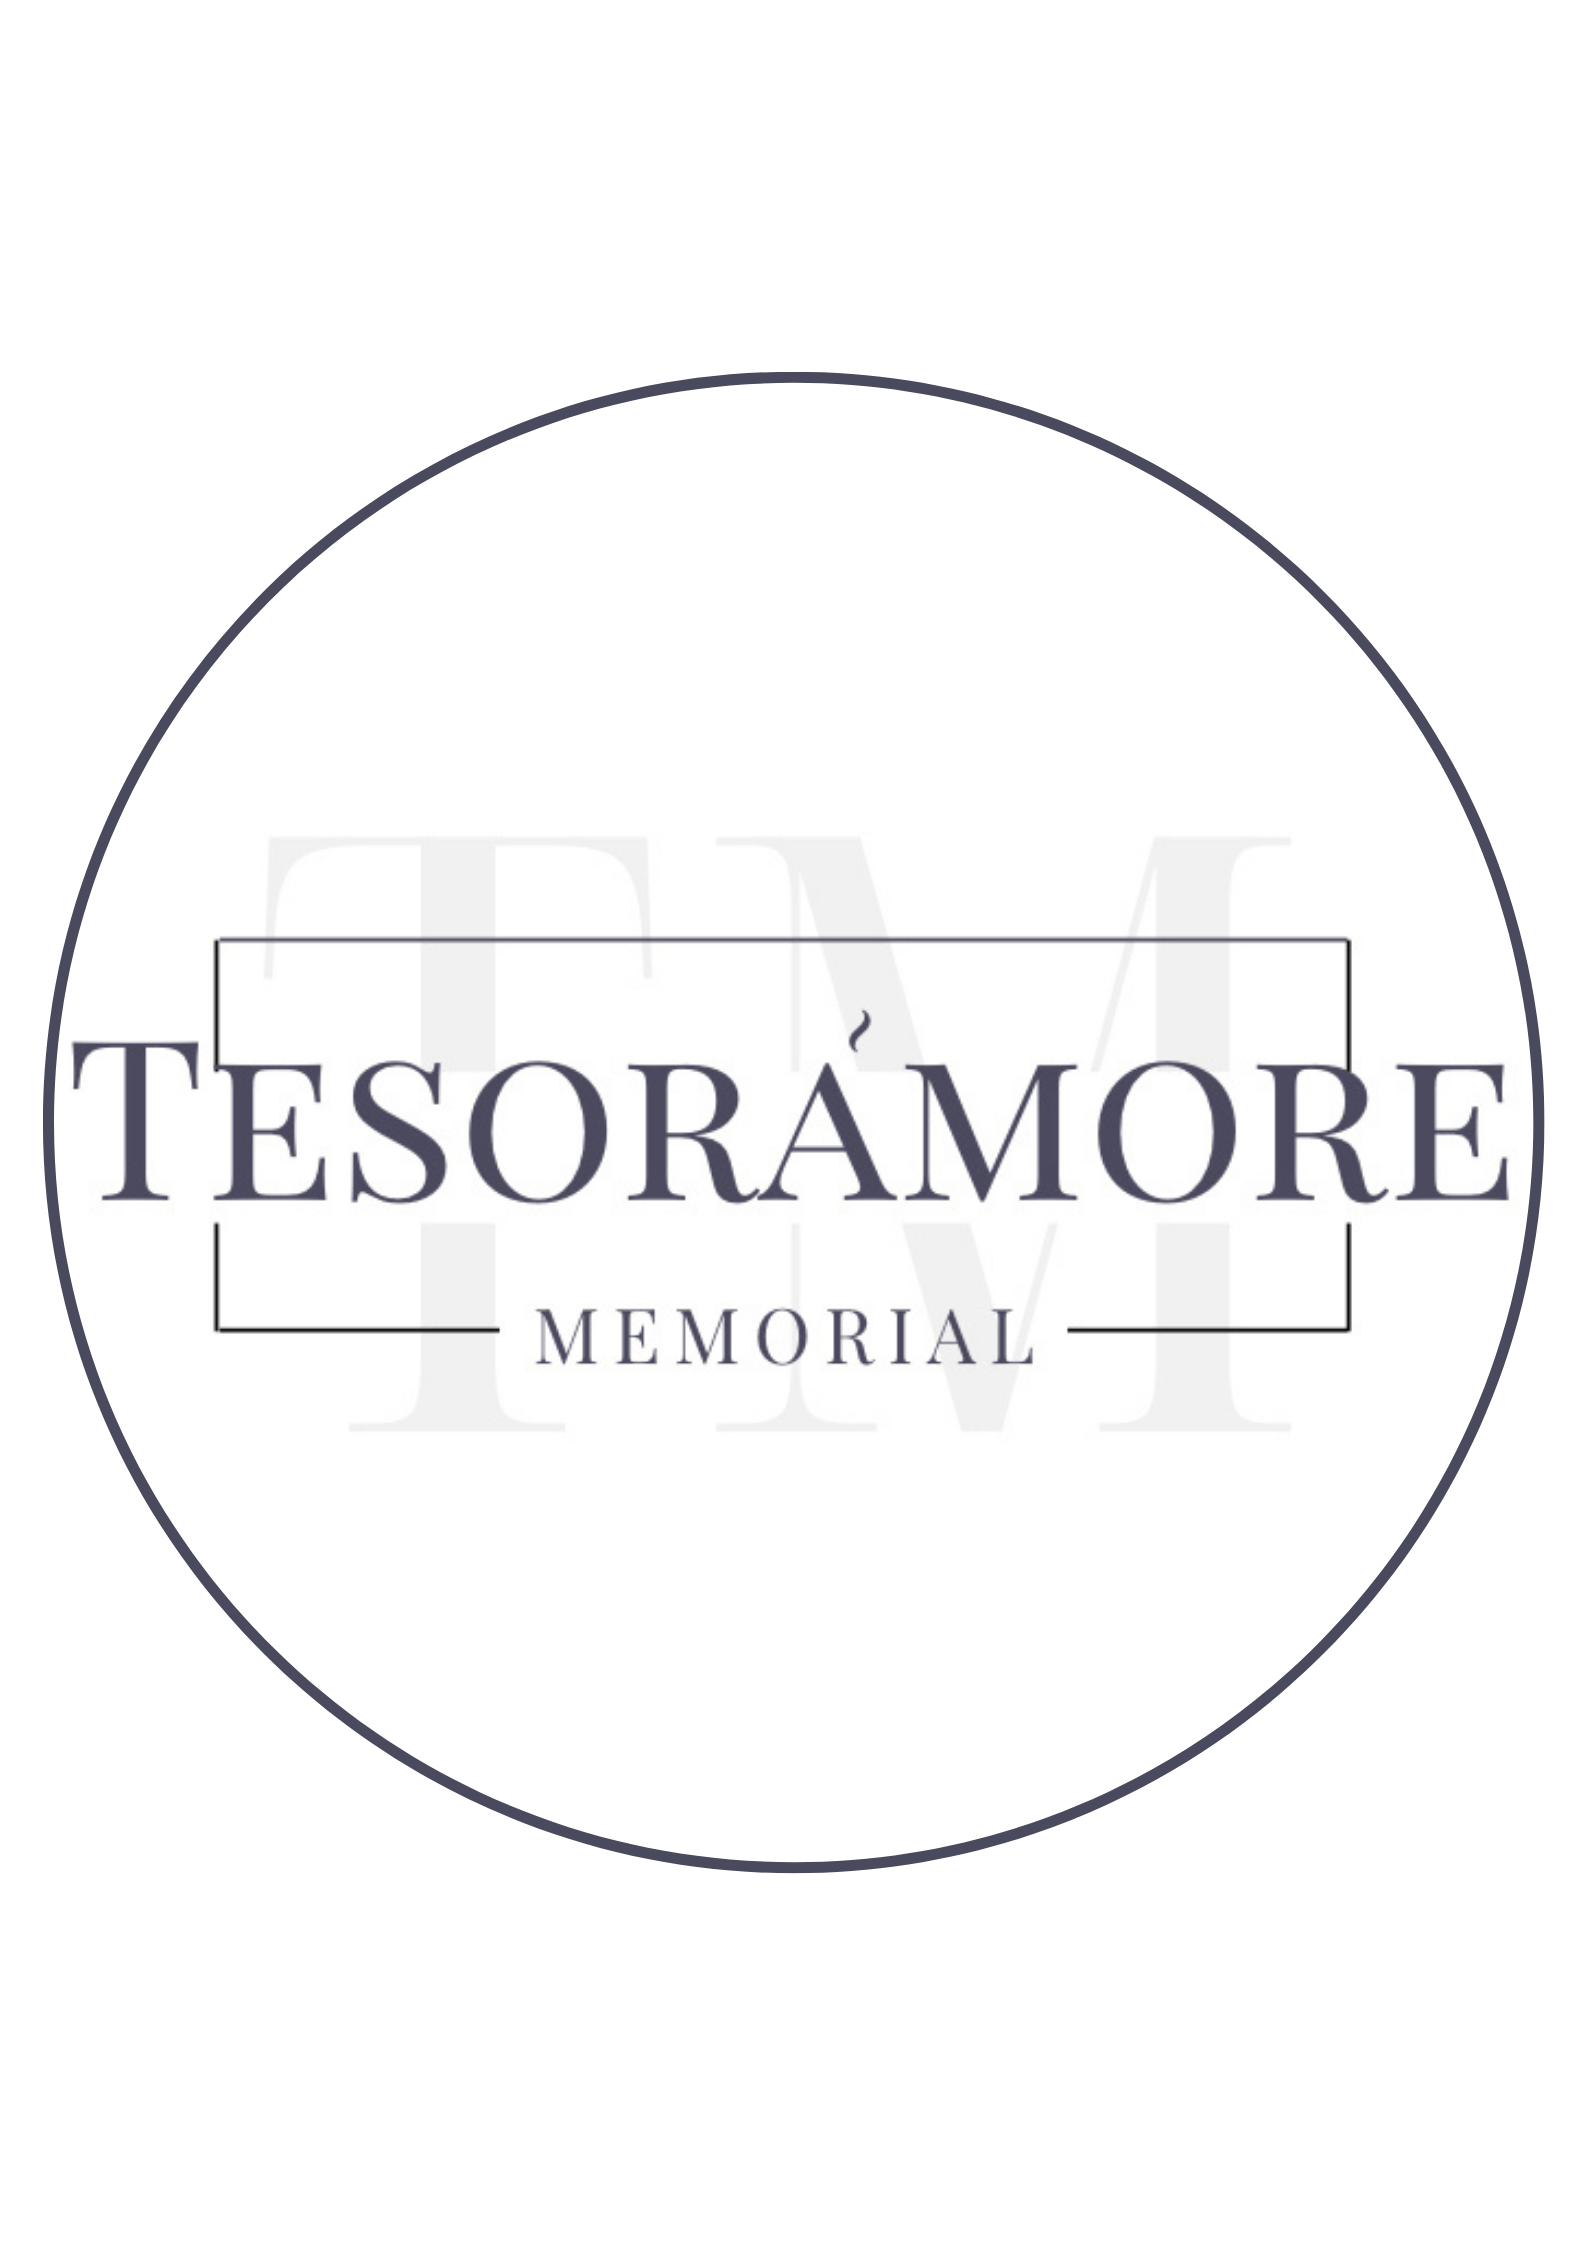 About Us, Tesoramore